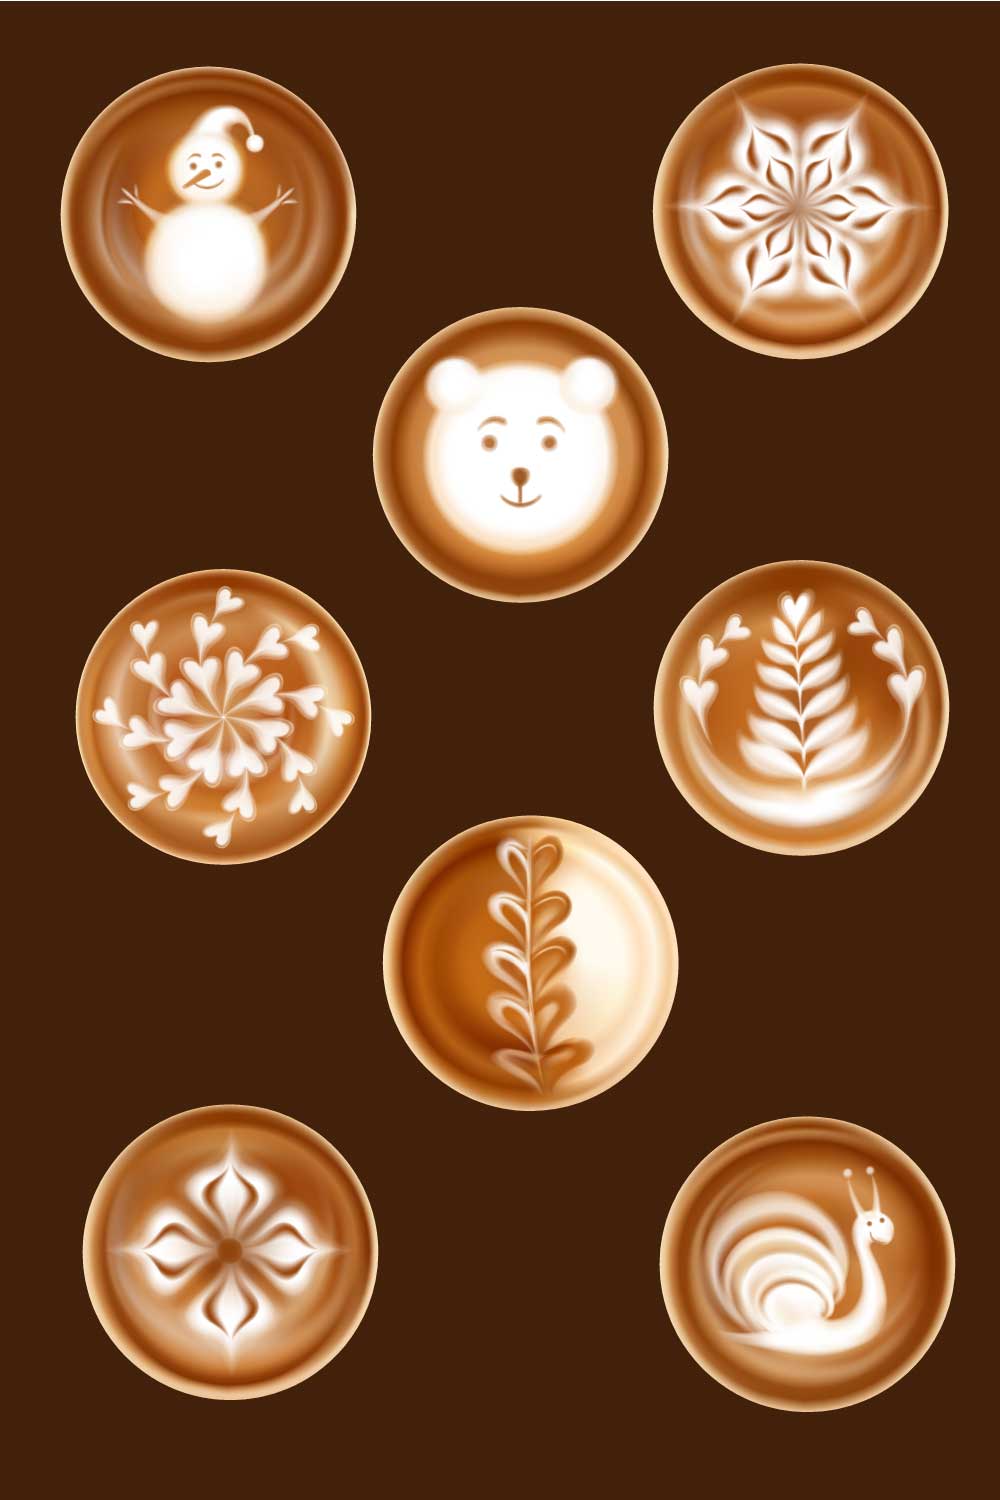 latte-art illustrations pinterest preview image.